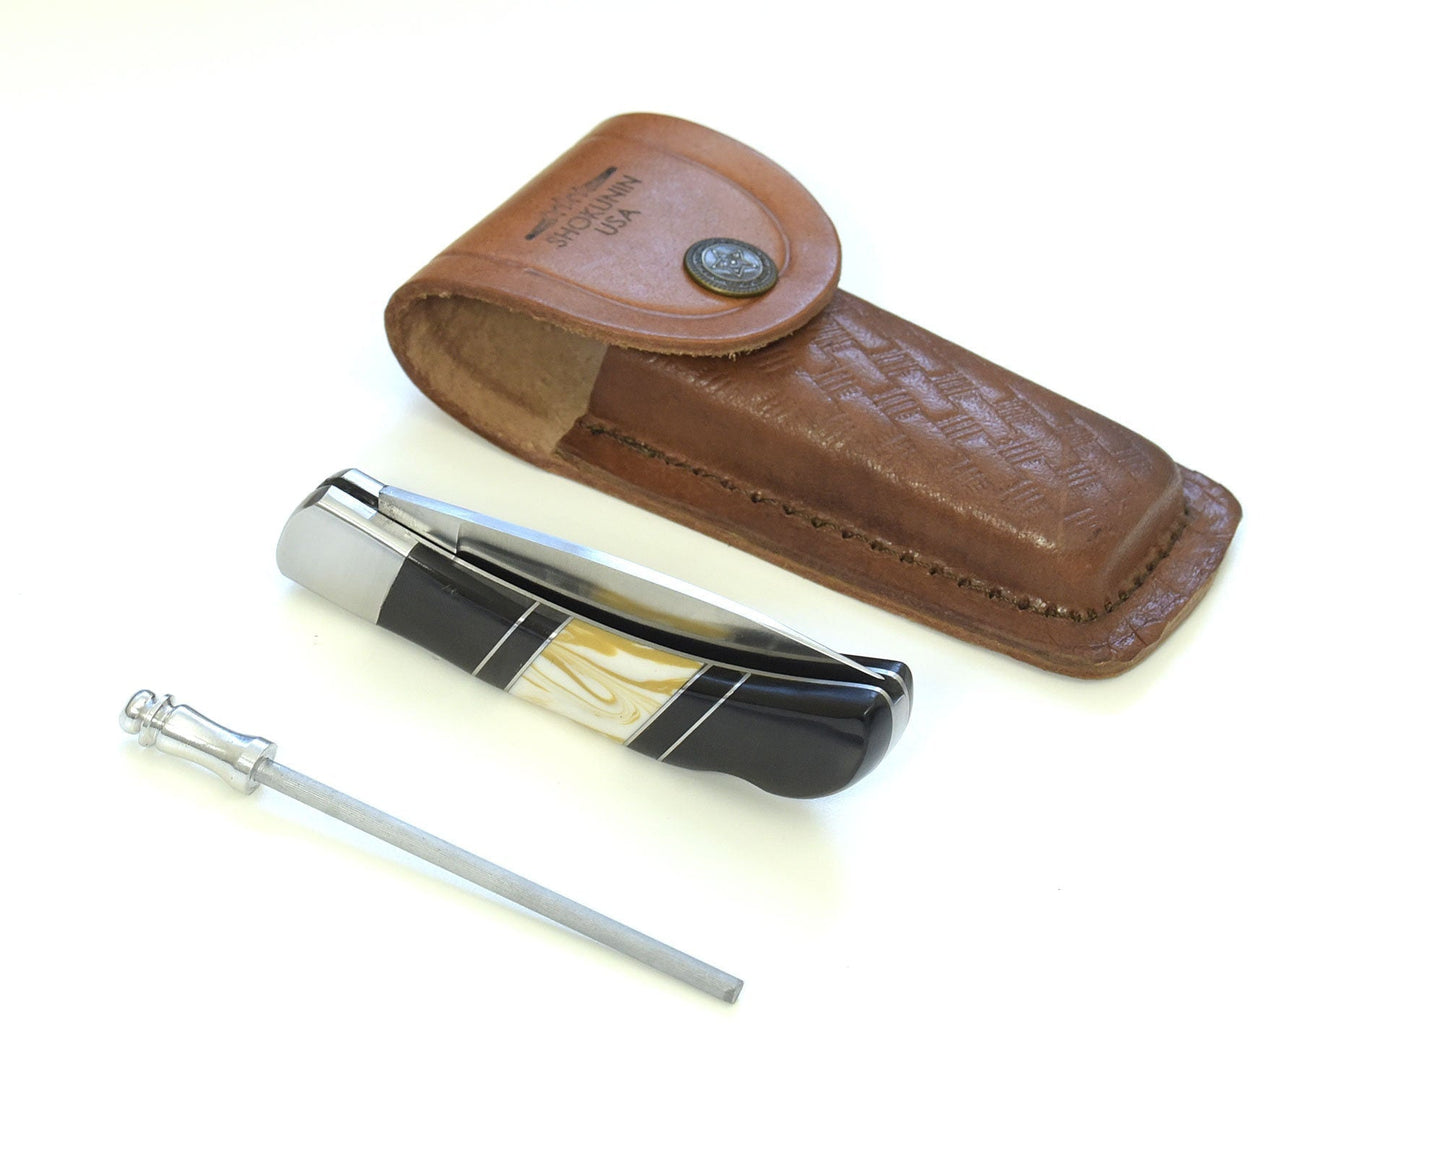 Shokunin USA Crux D2 Steel Folding Pocket Knife: Enhance Your Cutting Experience - Groove Rabbit